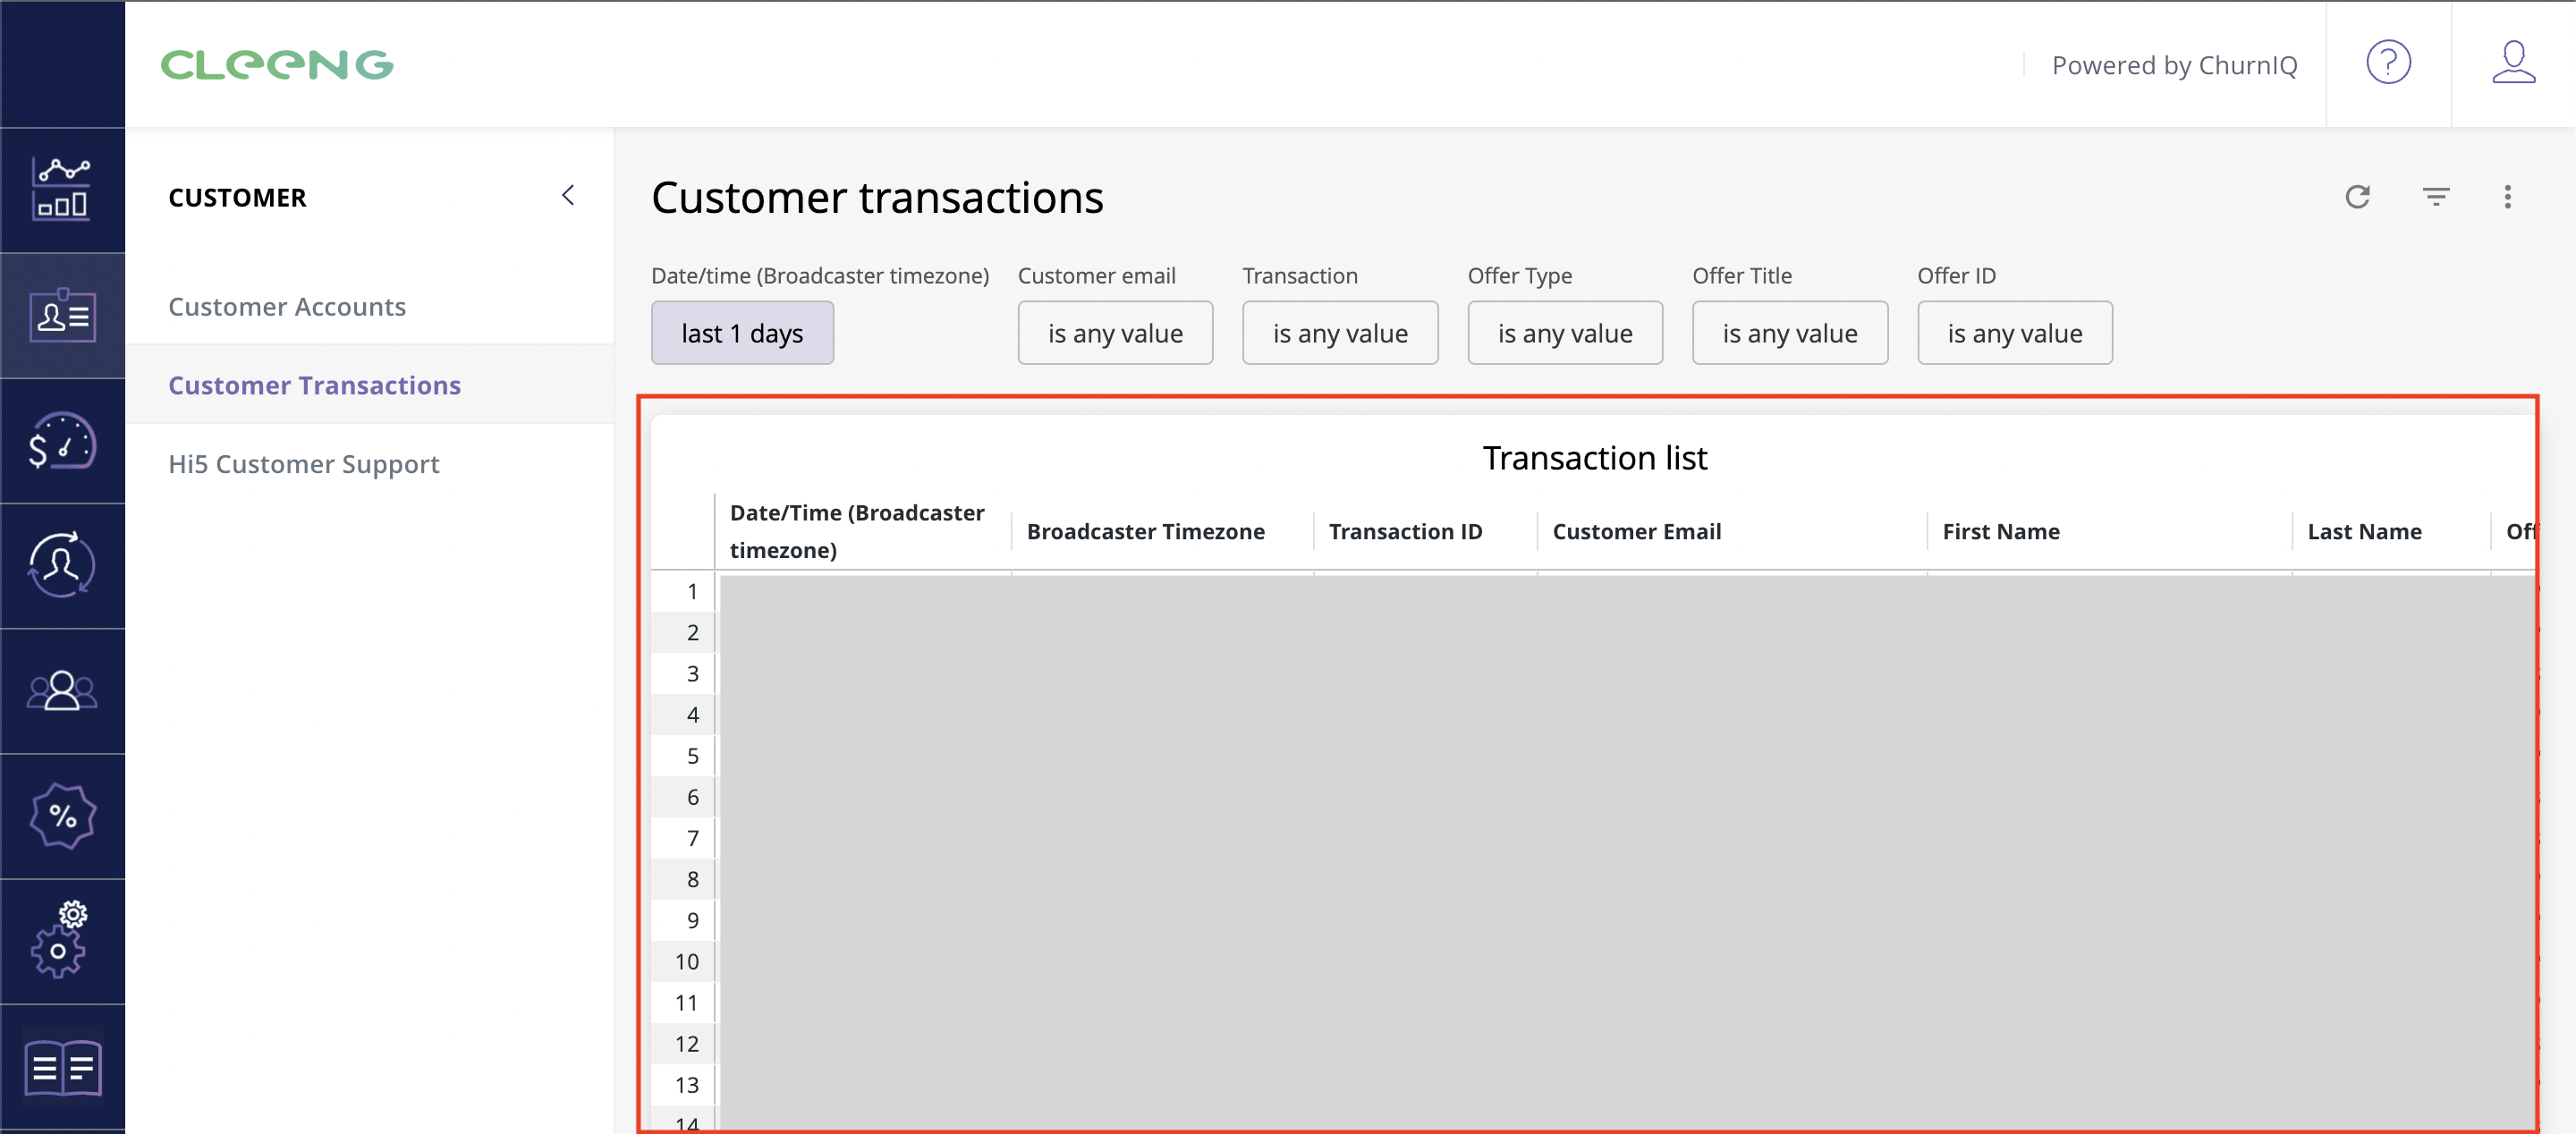 Cleeng_Customer-Transactions-dashboard2.png